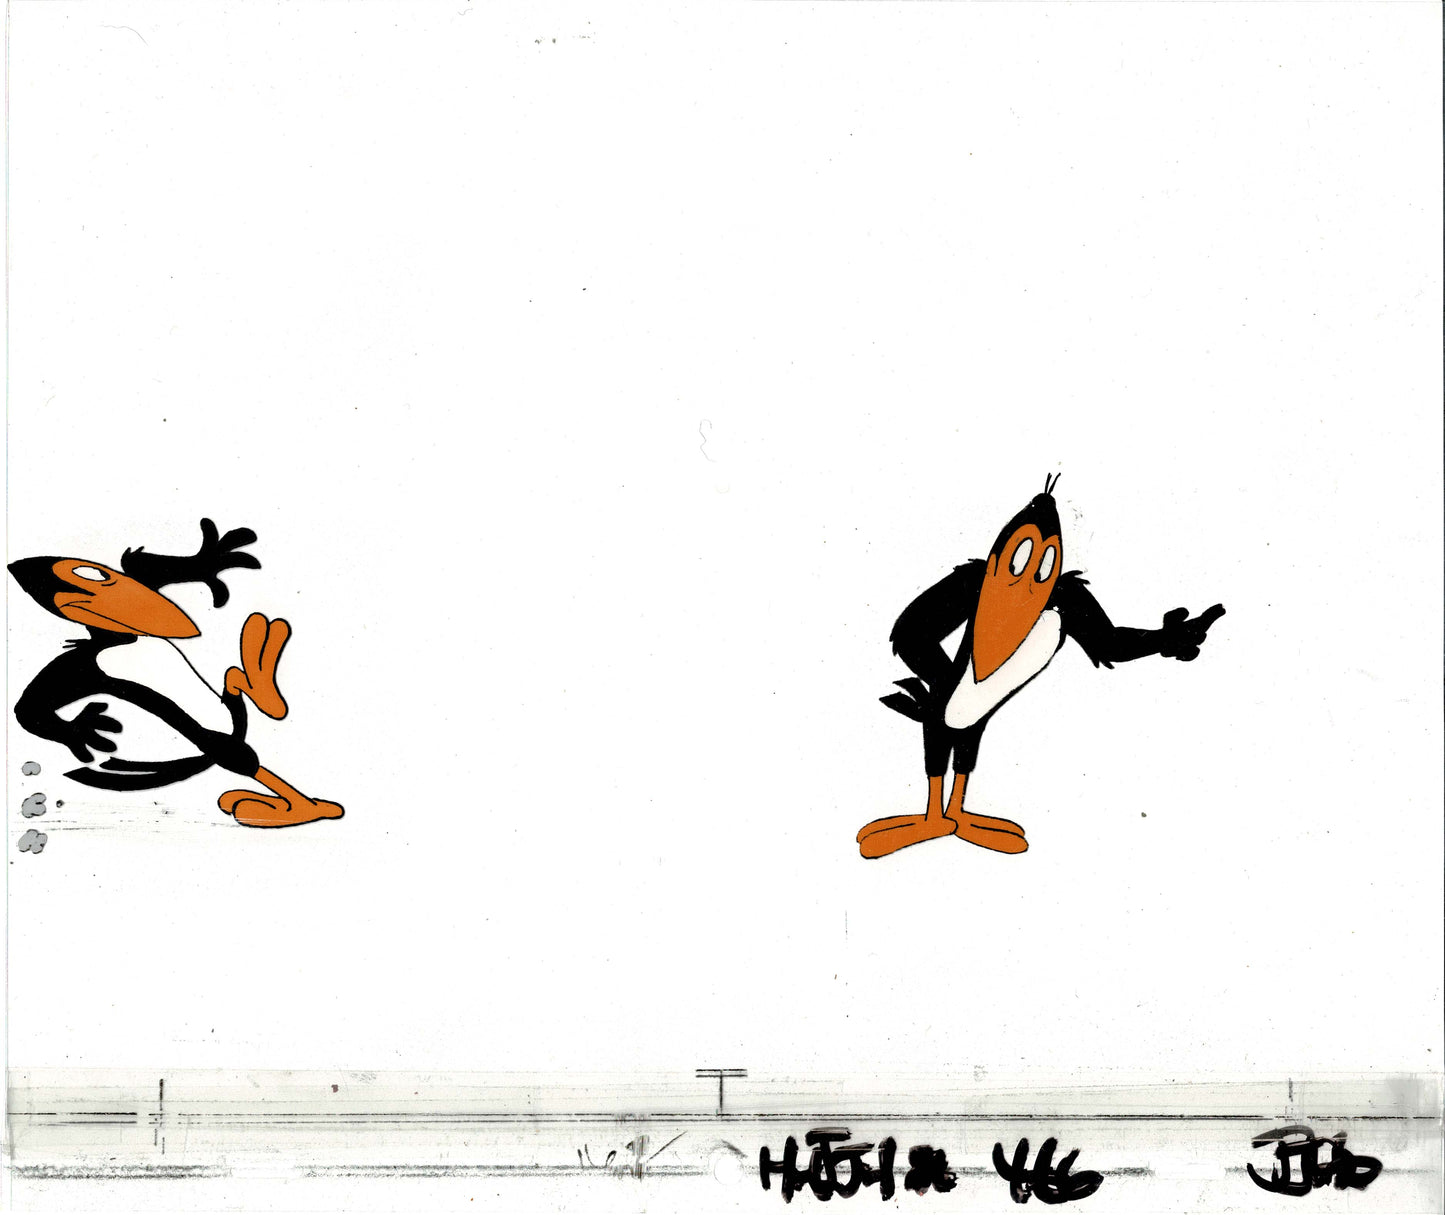 Heckle and Jeckle Production Animation Cel Setup Filmation 1979-80 h36